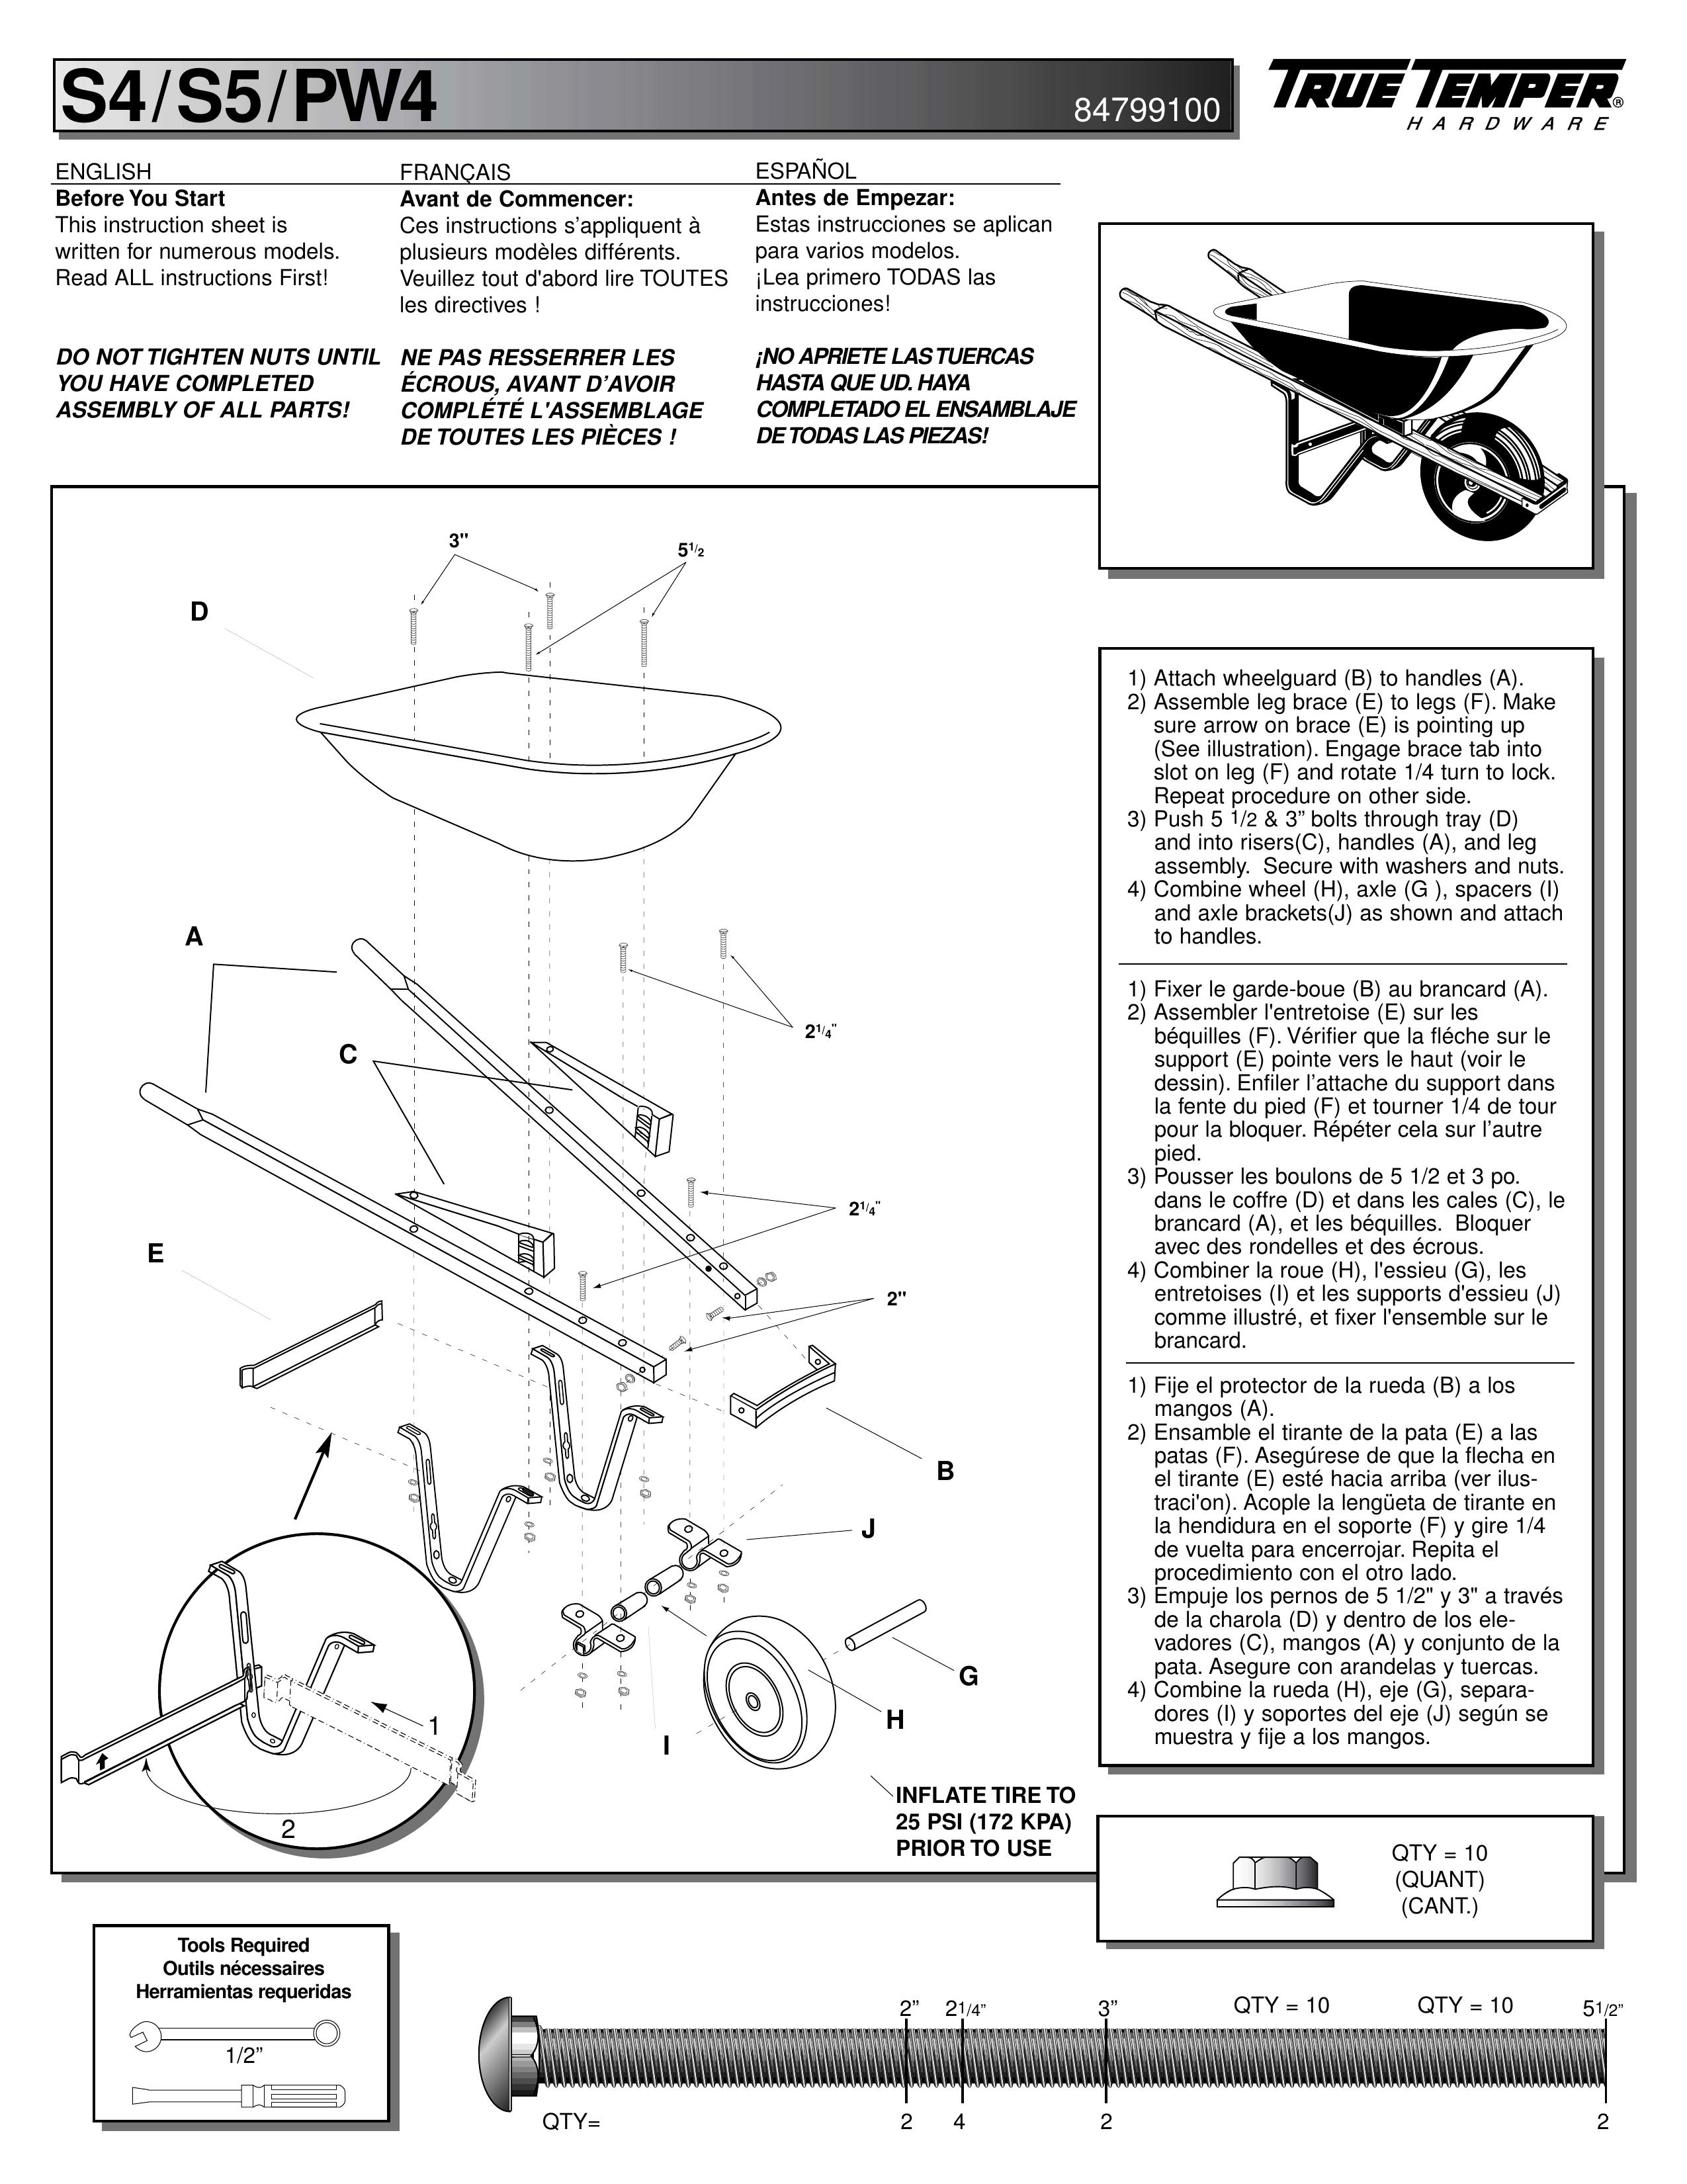 Ames True Temper PW4 Lawn Mower User Manual